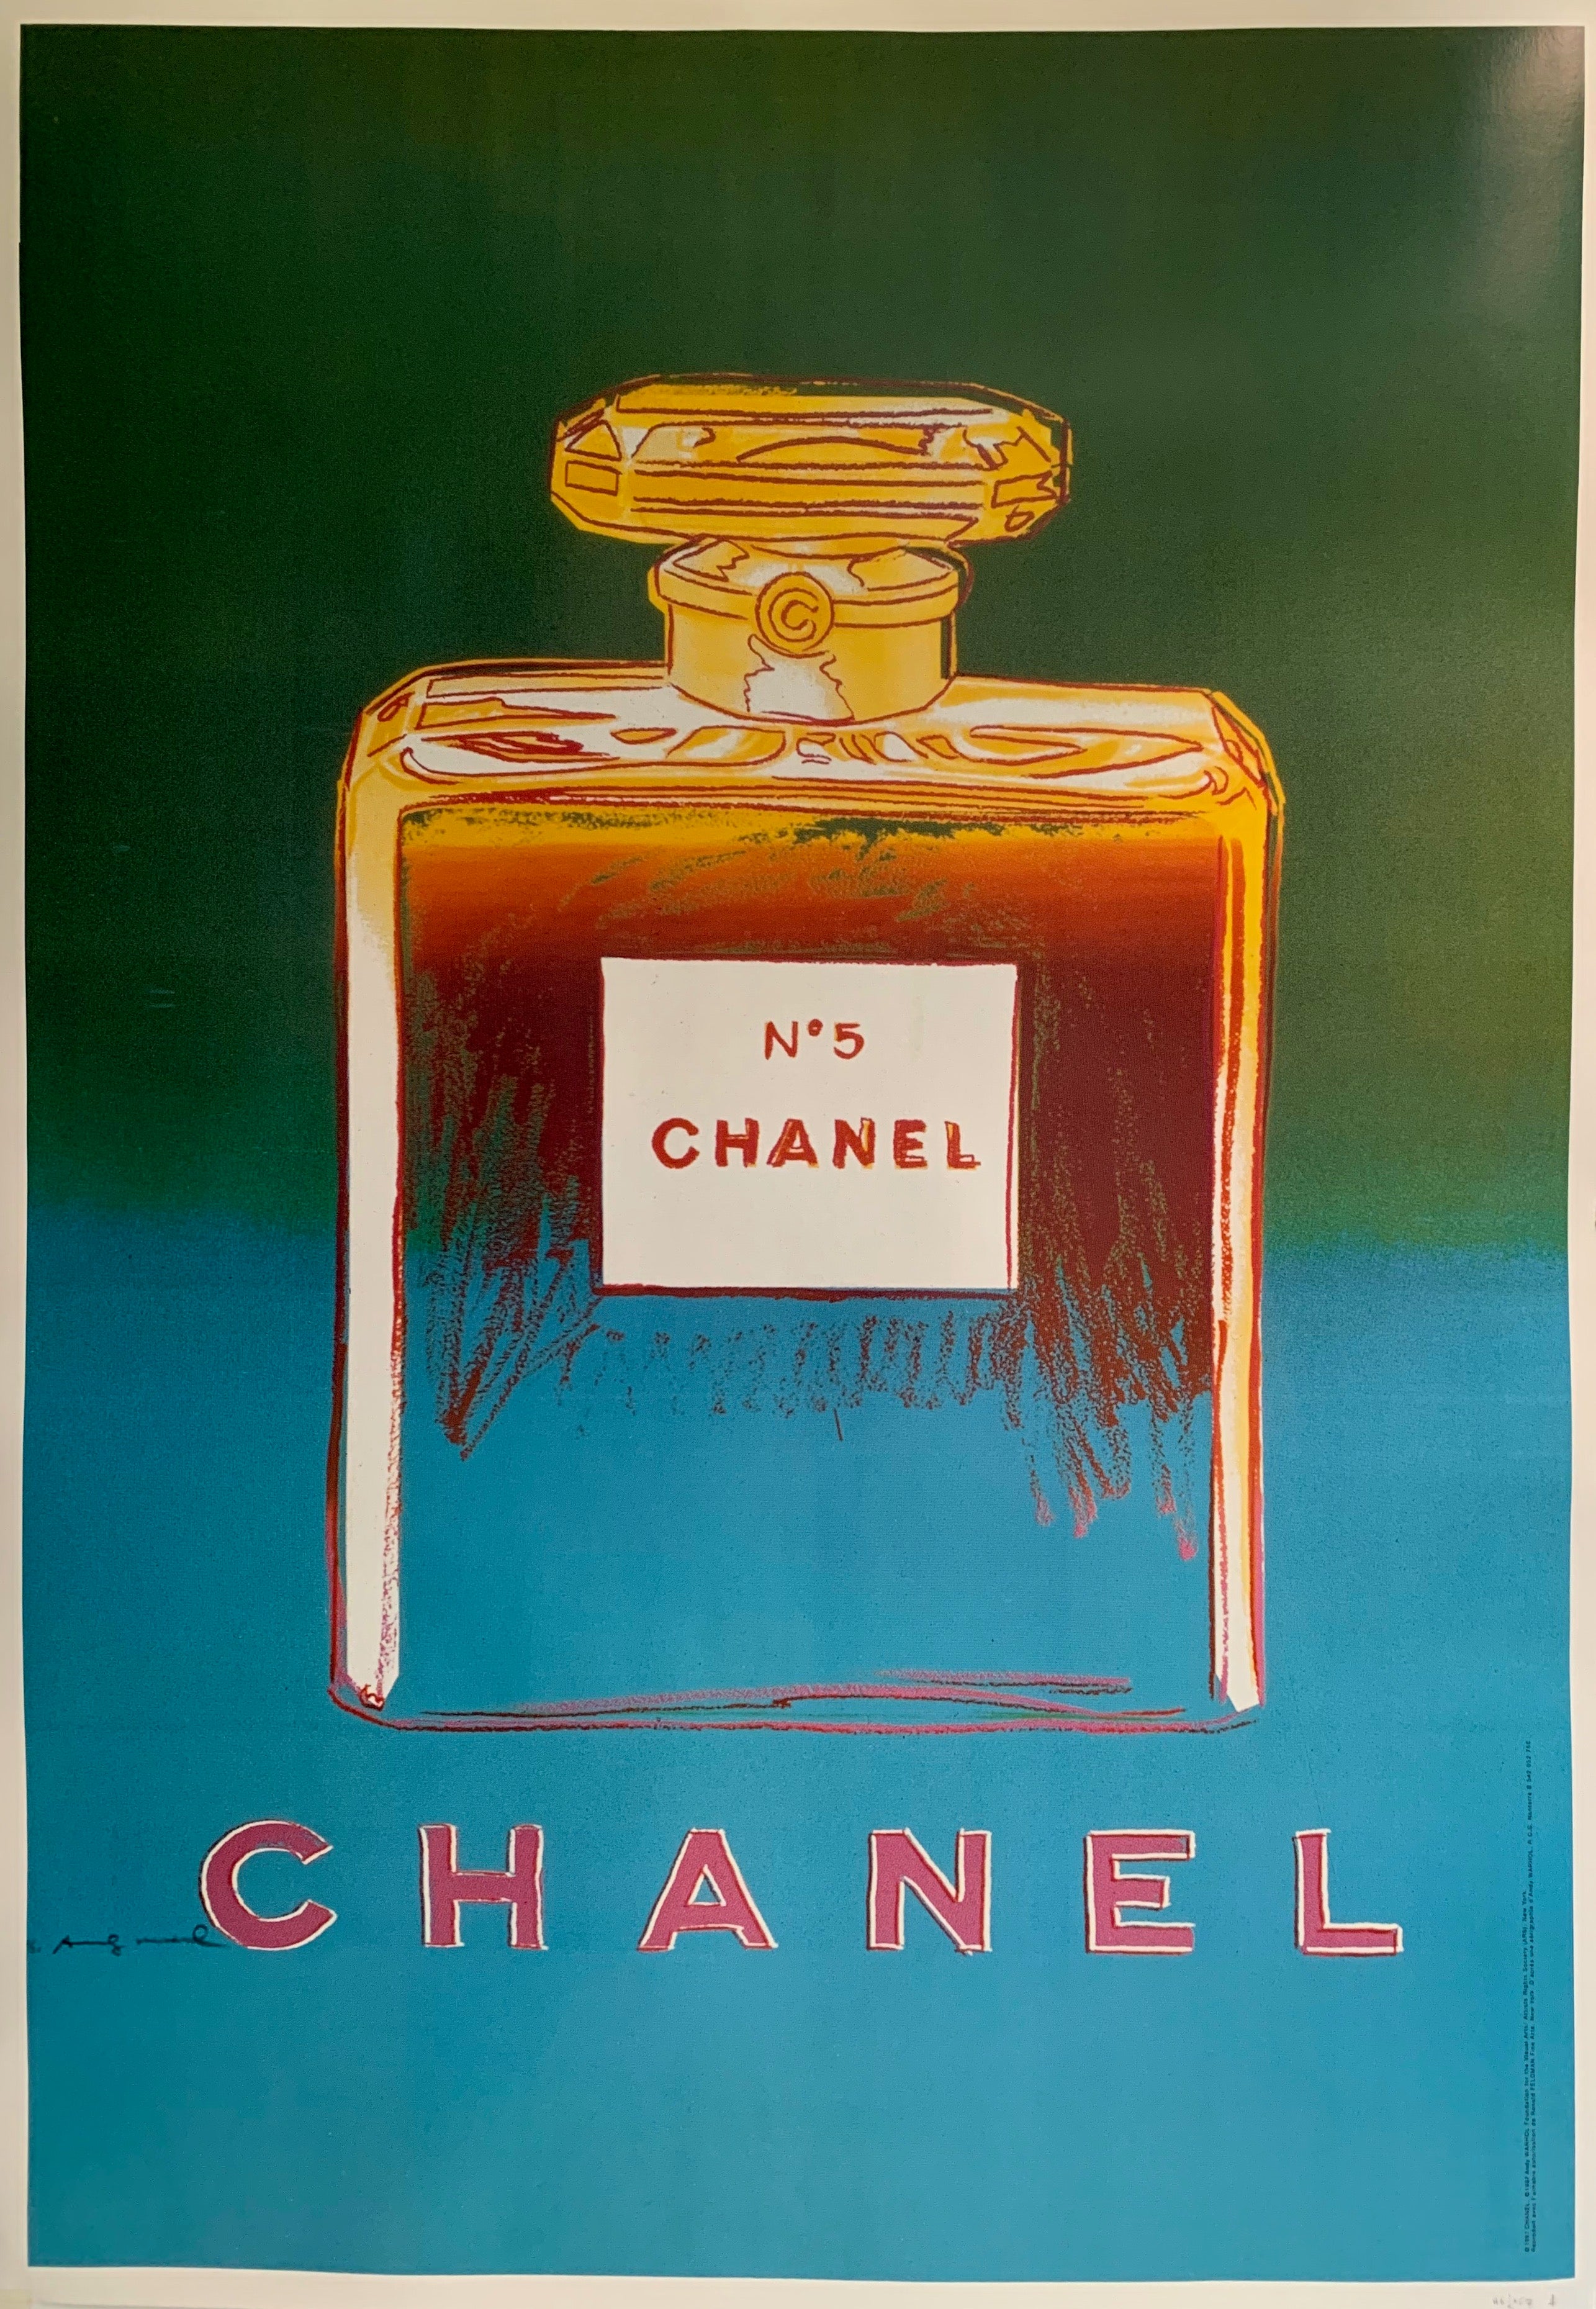 Chanel Perfume Art Poster/Print/Chanel Bottles/Aqua/17x22 inch